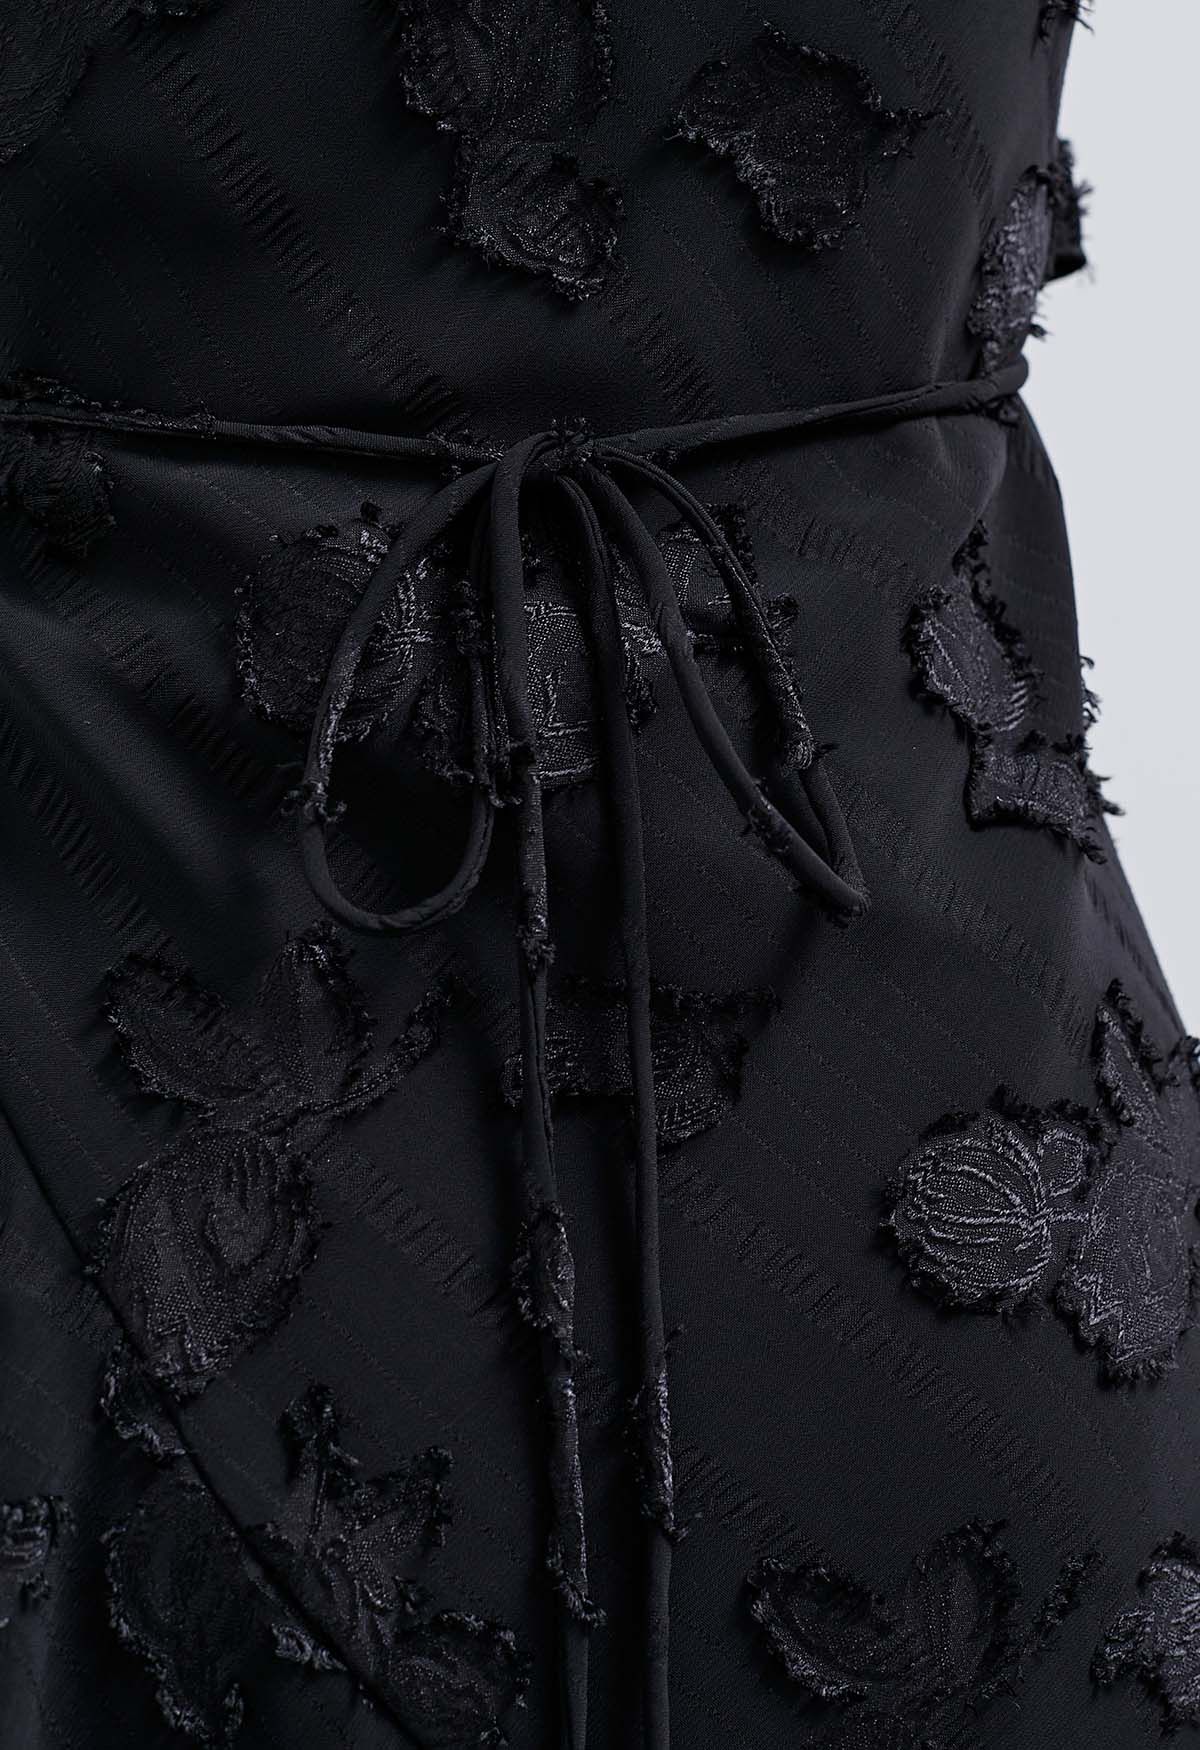 Burnout Rose Ruffle Edge V-Neck Midi Dress in Black